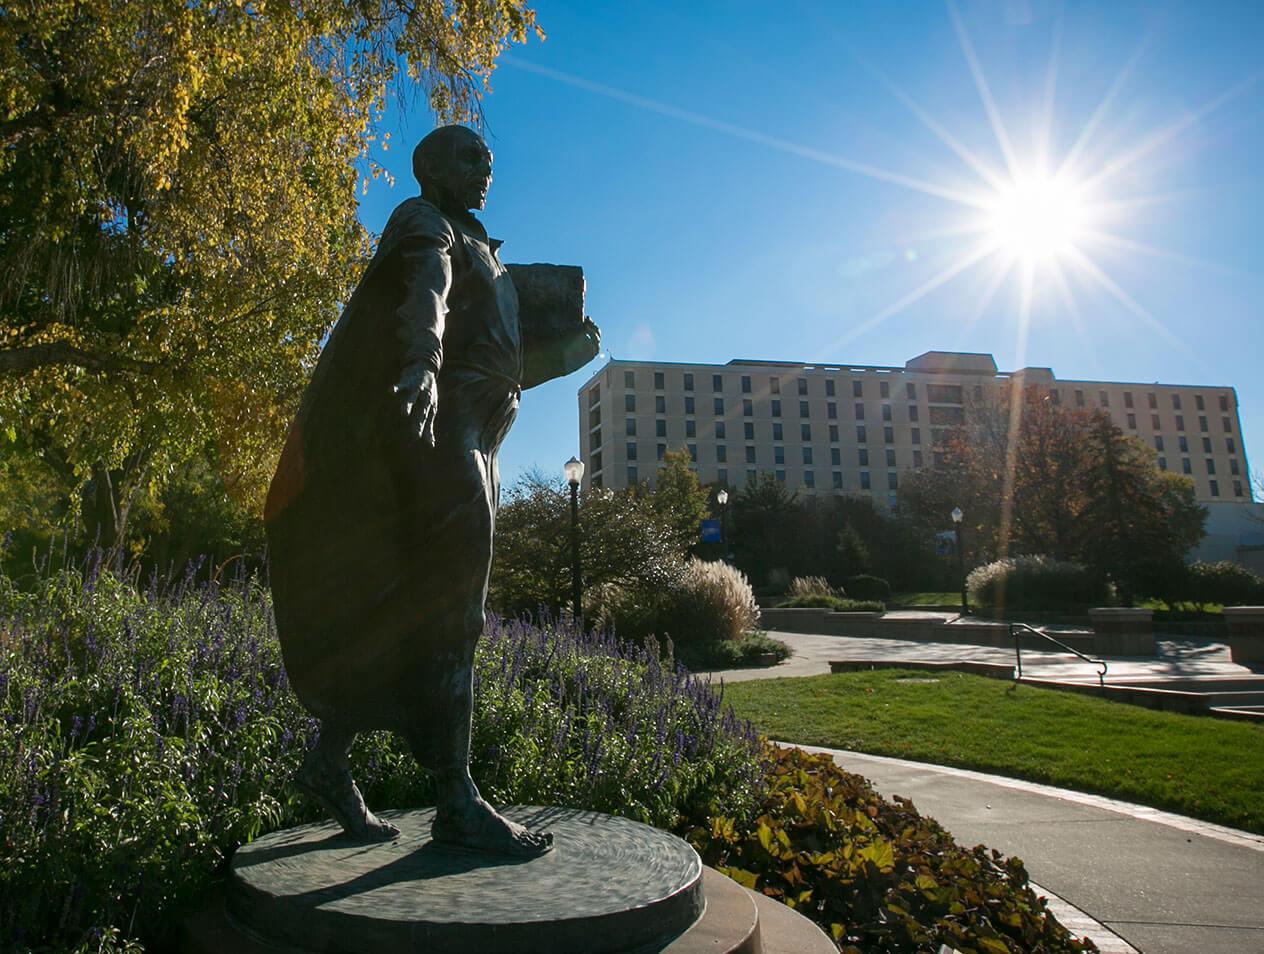 St. Ignatius statue in the bright sun